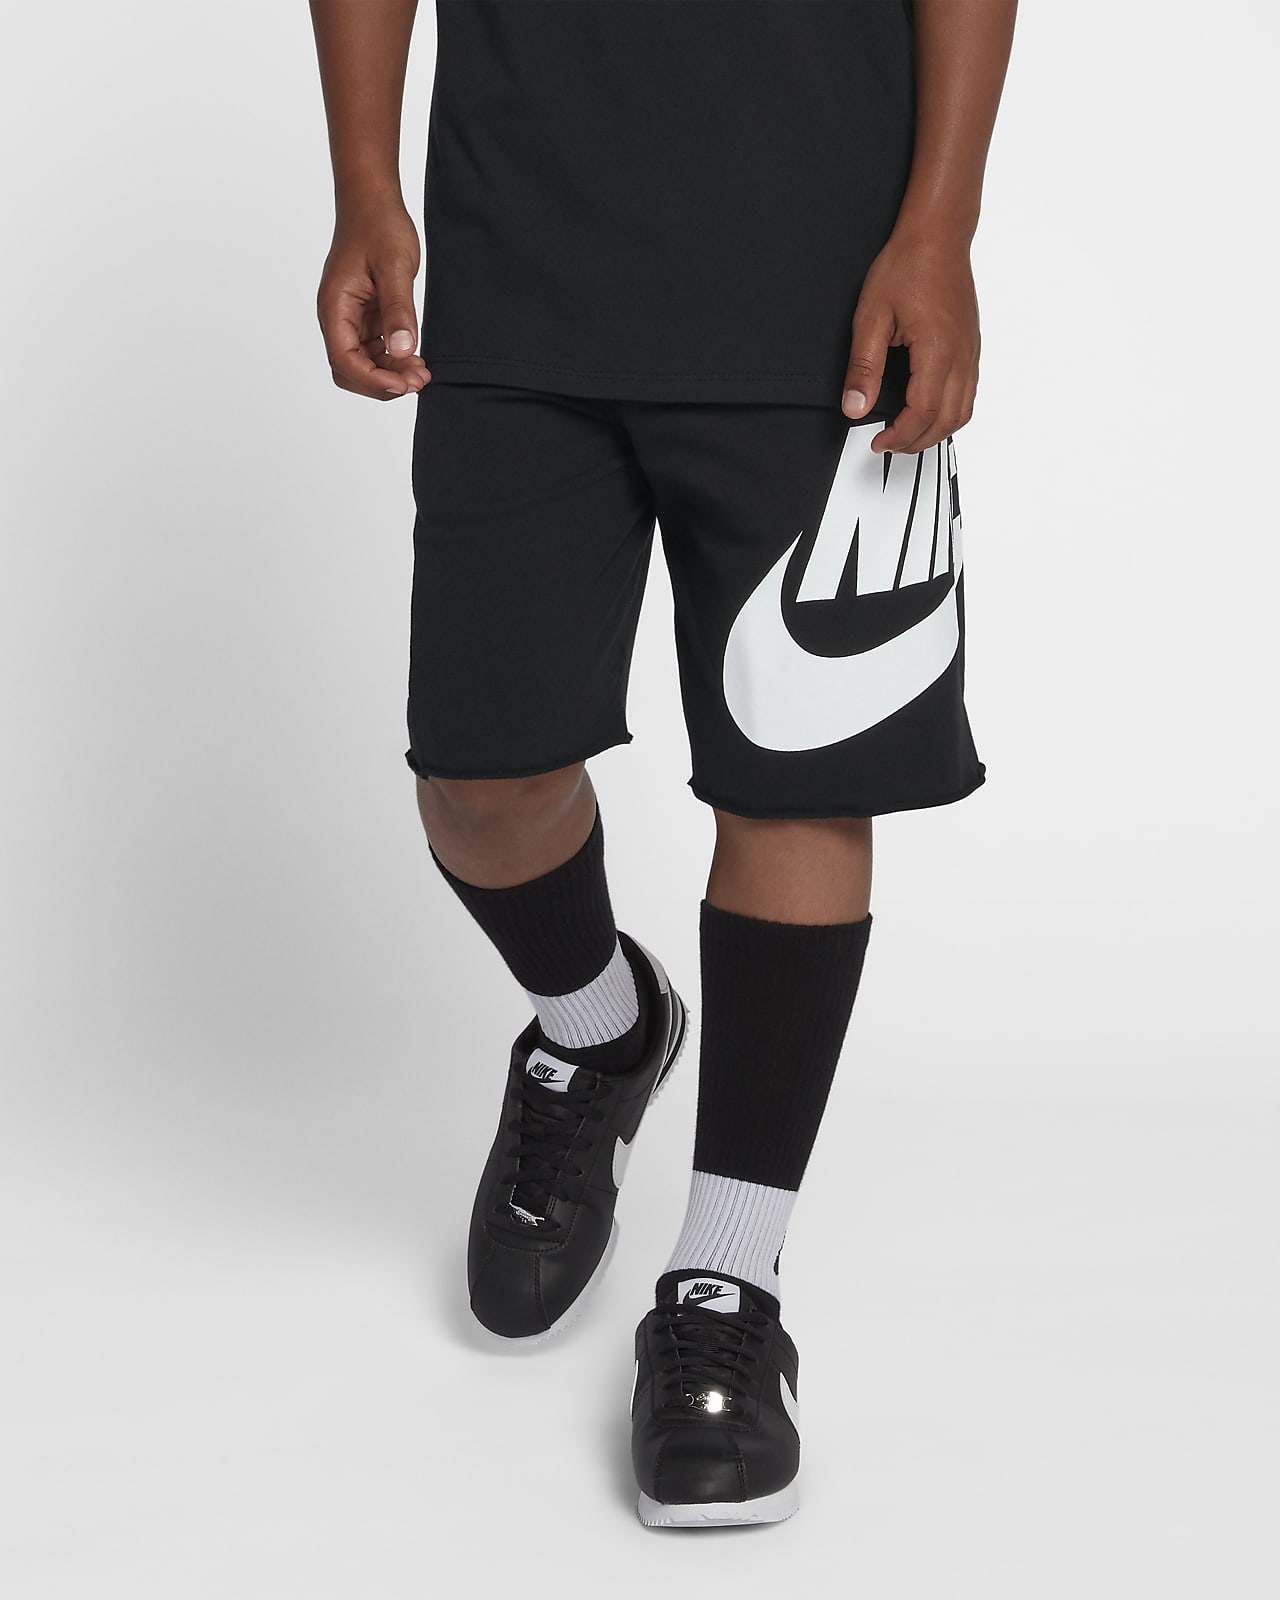 Nike Sportswear Alumni Shorts für 